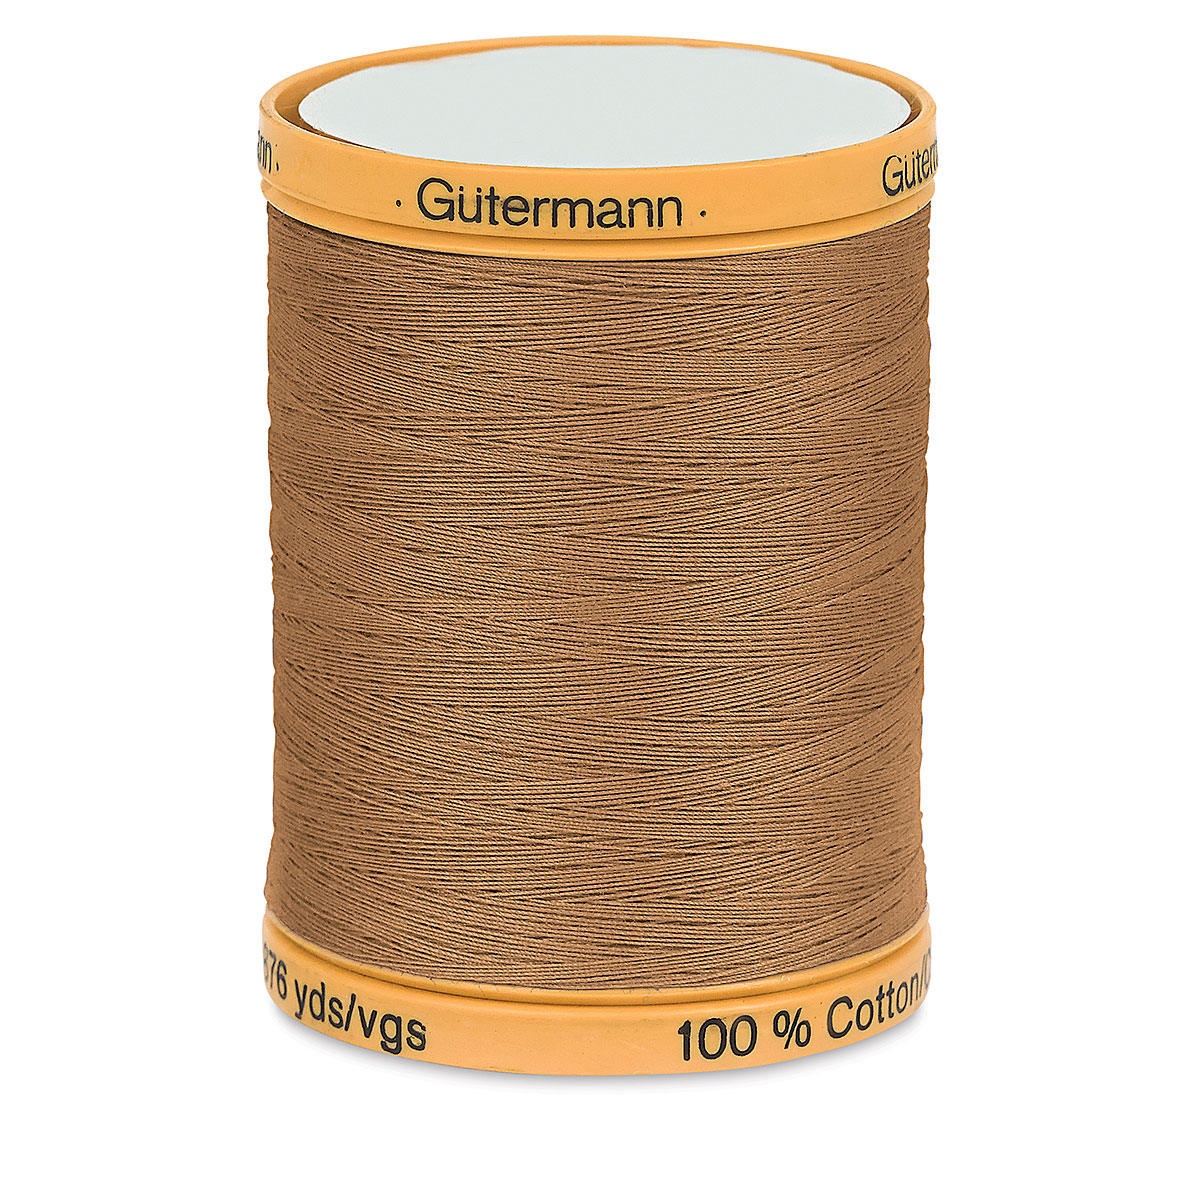 2410 Light Brown 100m Gutermann Cotton Thread